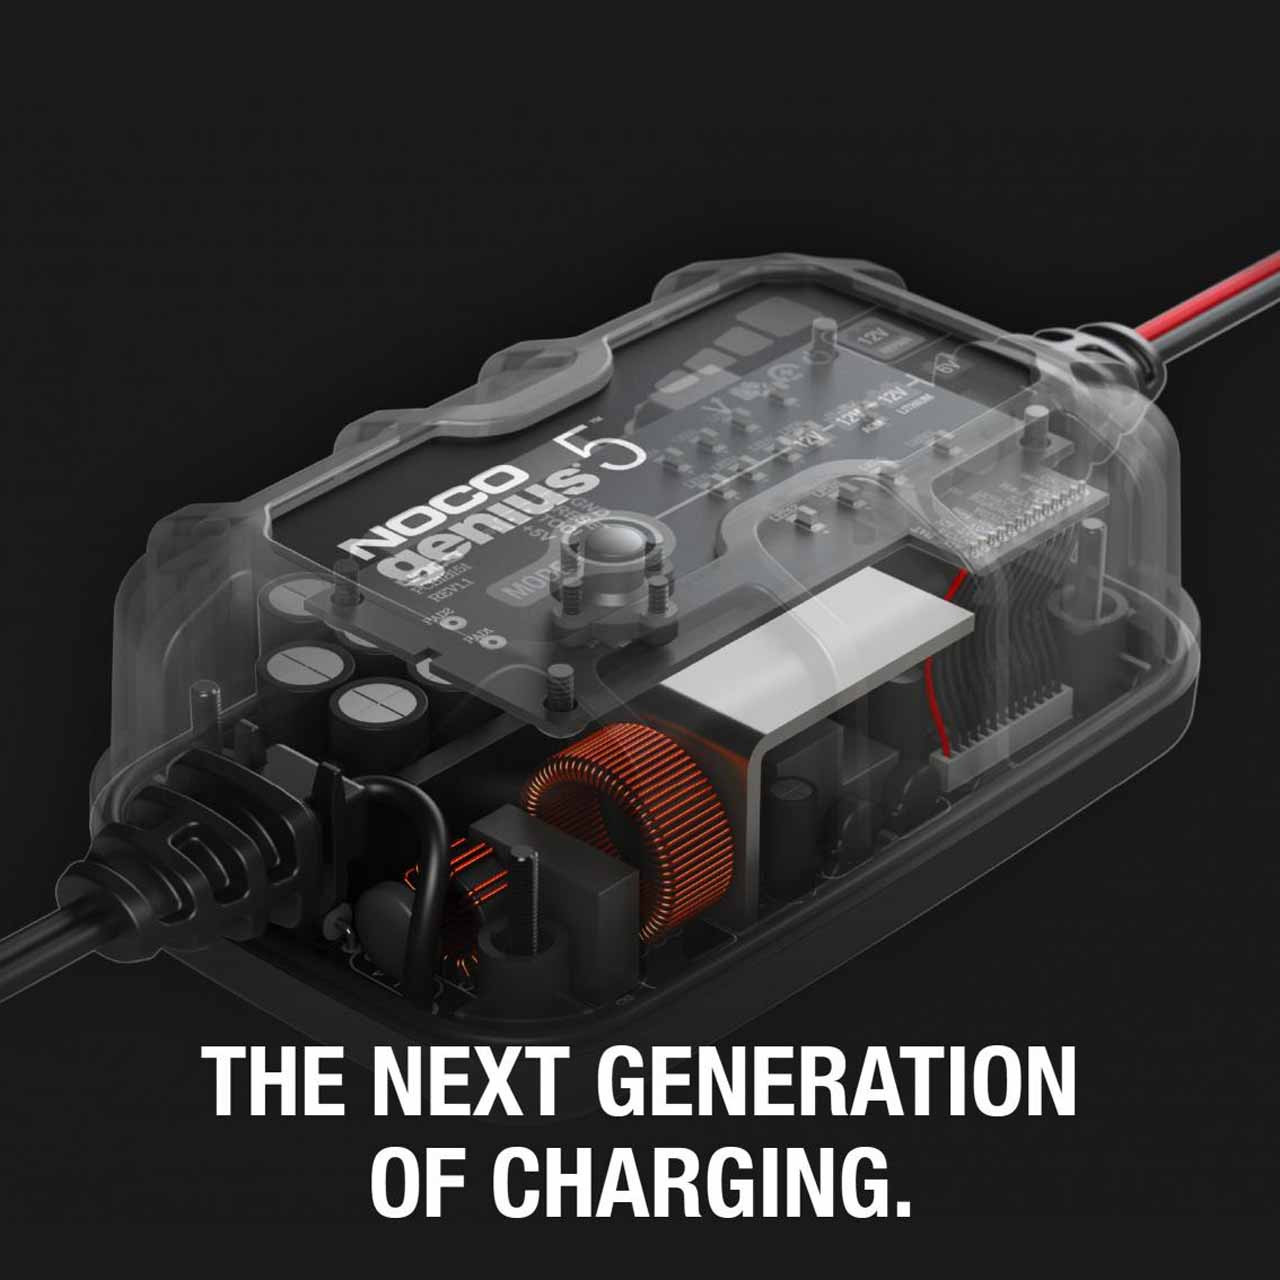 NOCO Genius 5 6V/12V Battery Charger (5A)